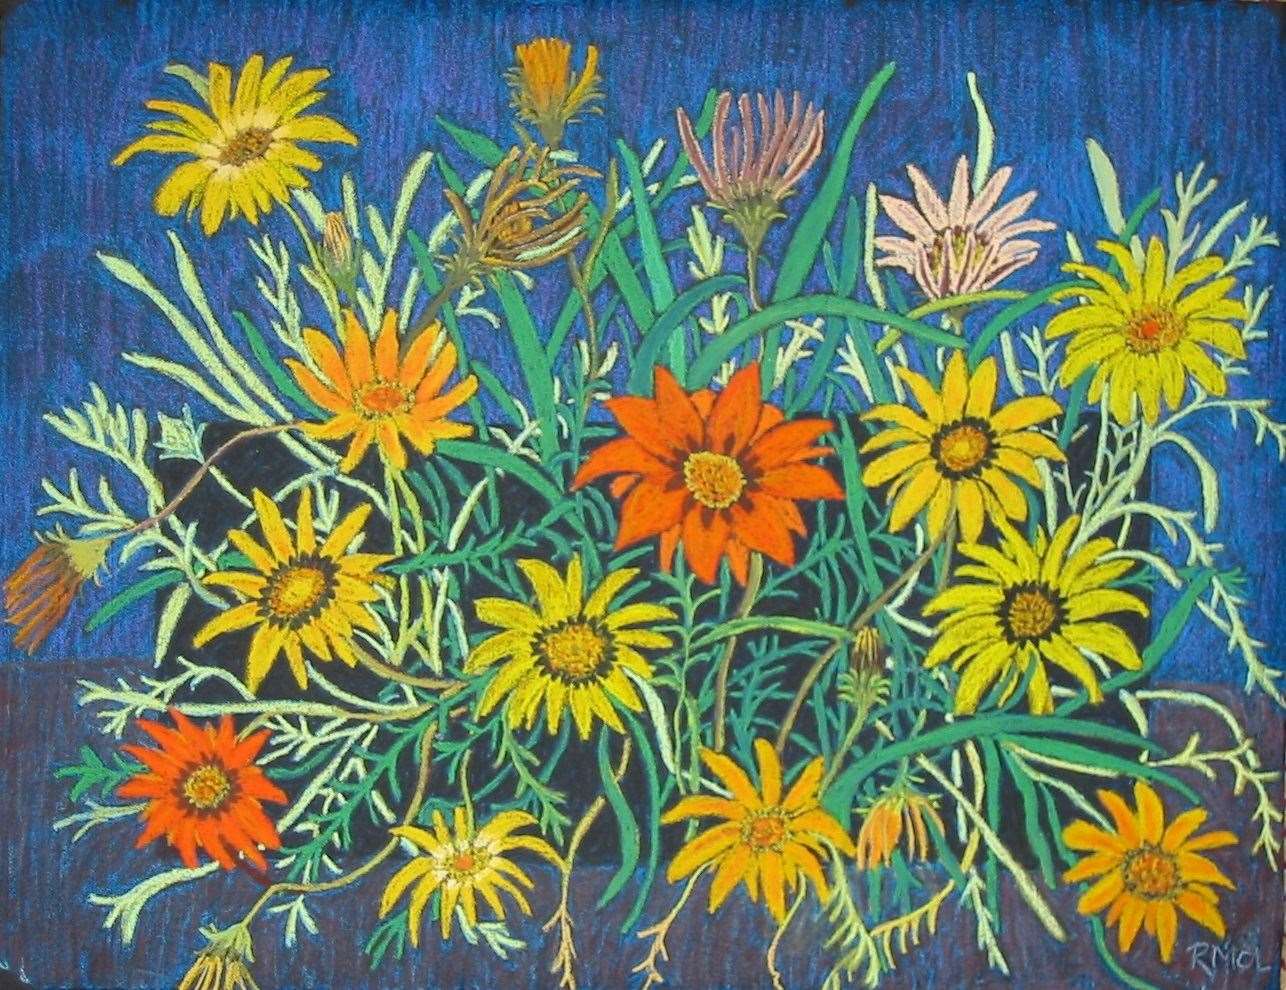 Rosie created vibrant artworks of flowers